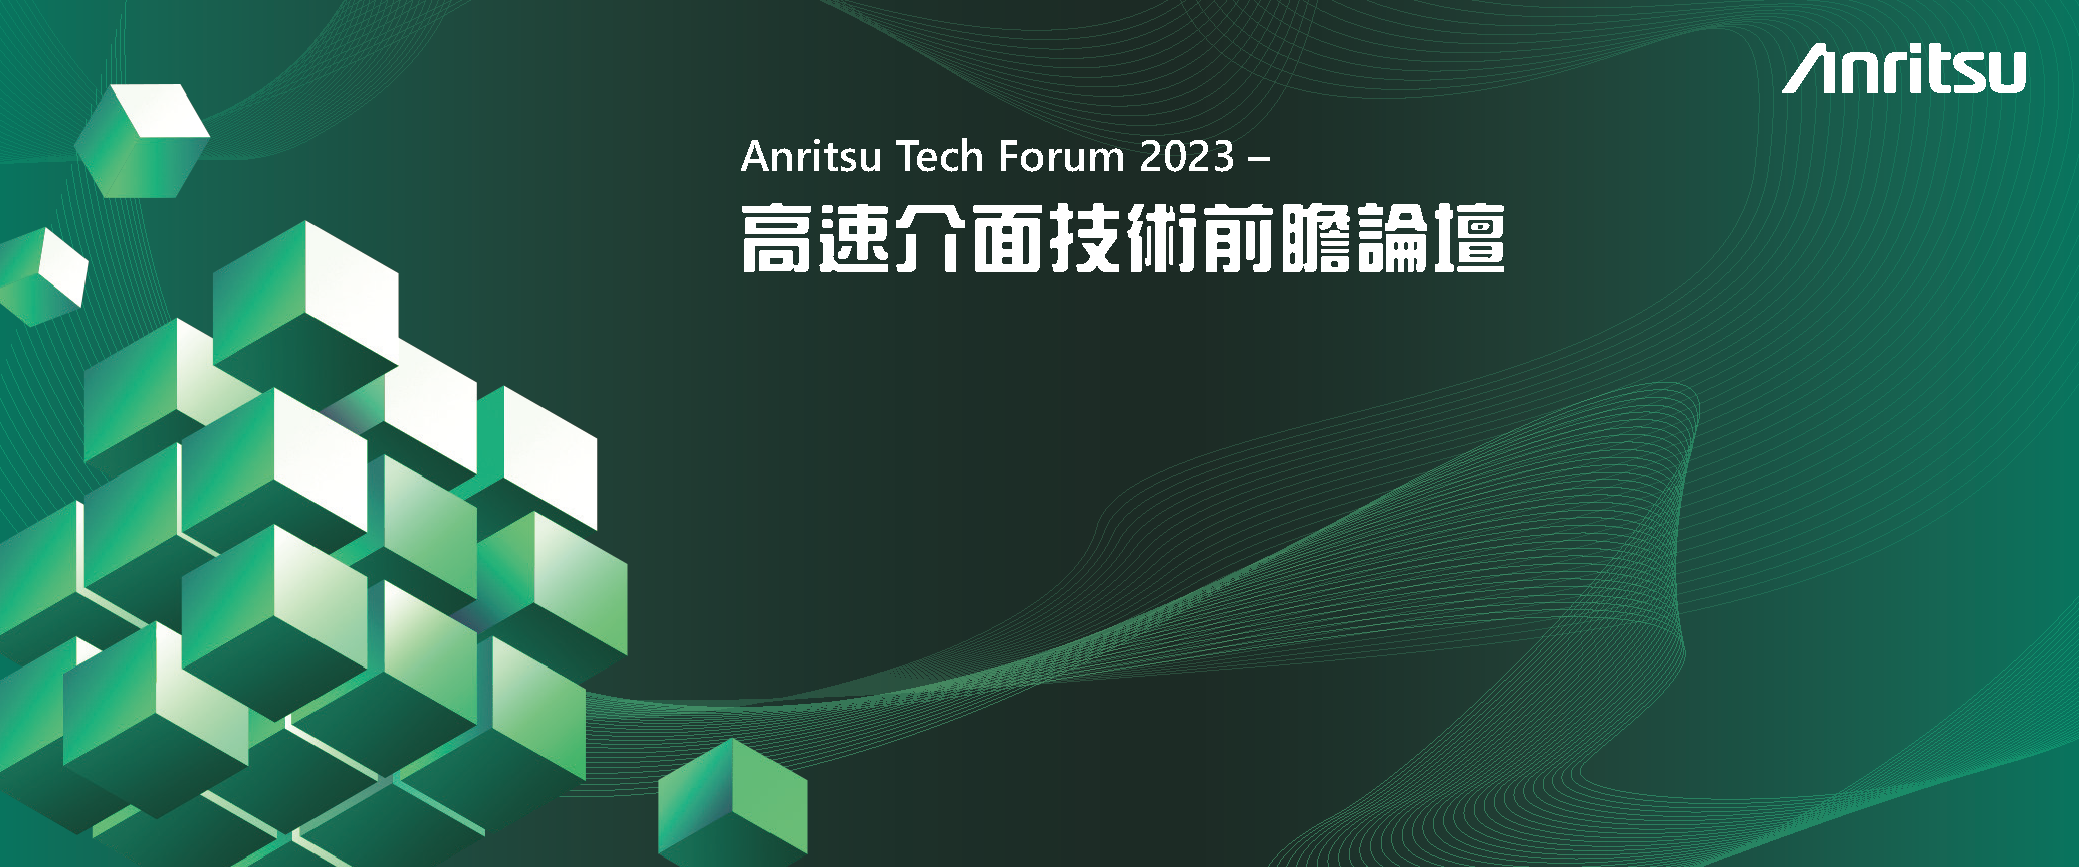 Anritsu Tech Forum 2023-Digital